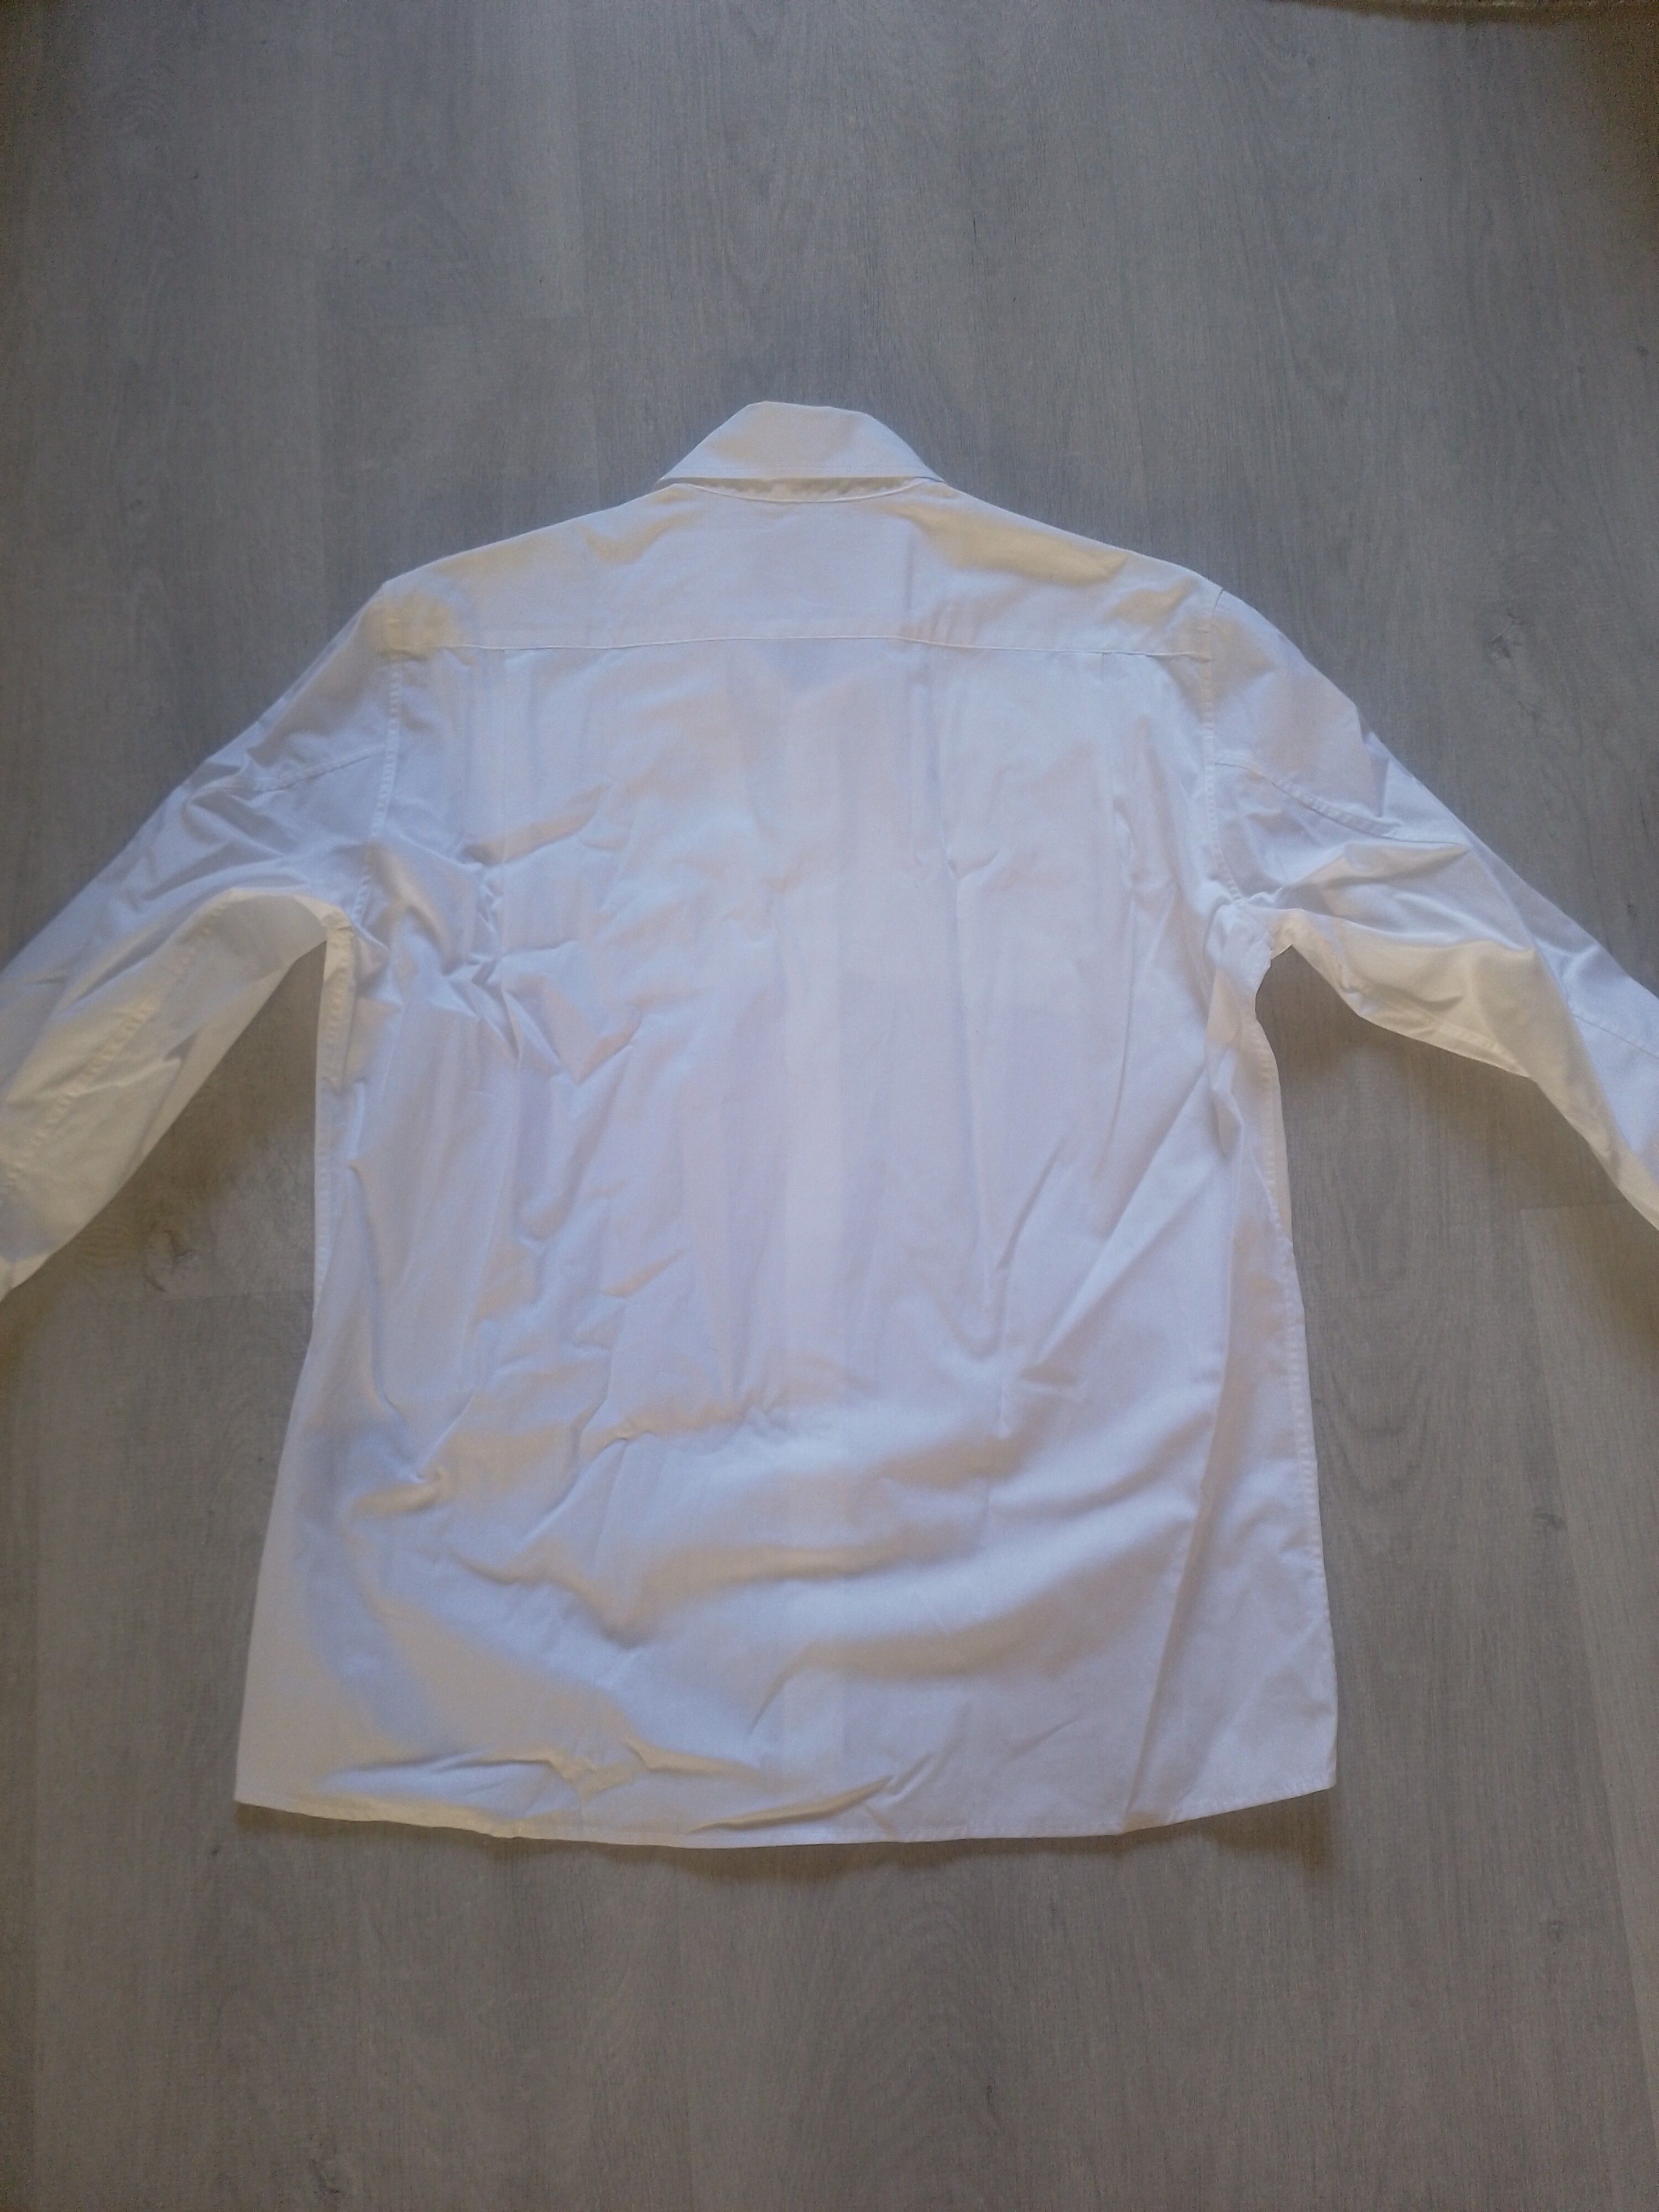 Ann Demeulemeester Double pocket shirt Size US S / EU 44-46 / 1 - 2 Preview